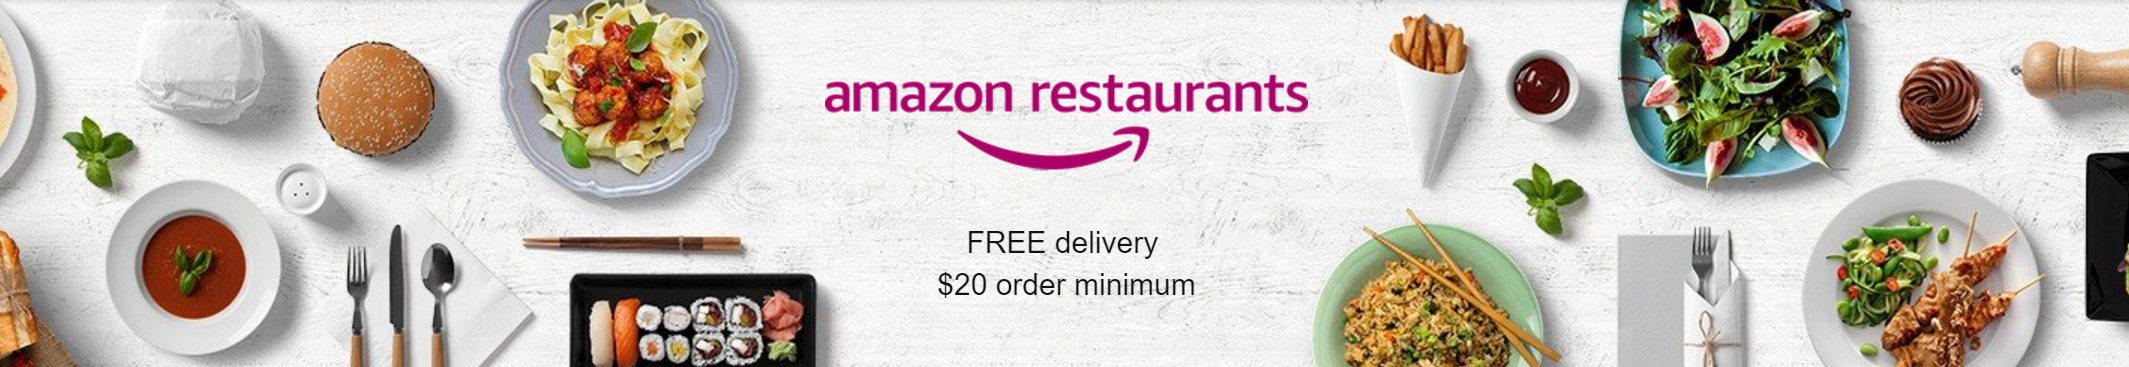 Amazon Restaurants has Amazon Flex drivers providing delivery services.